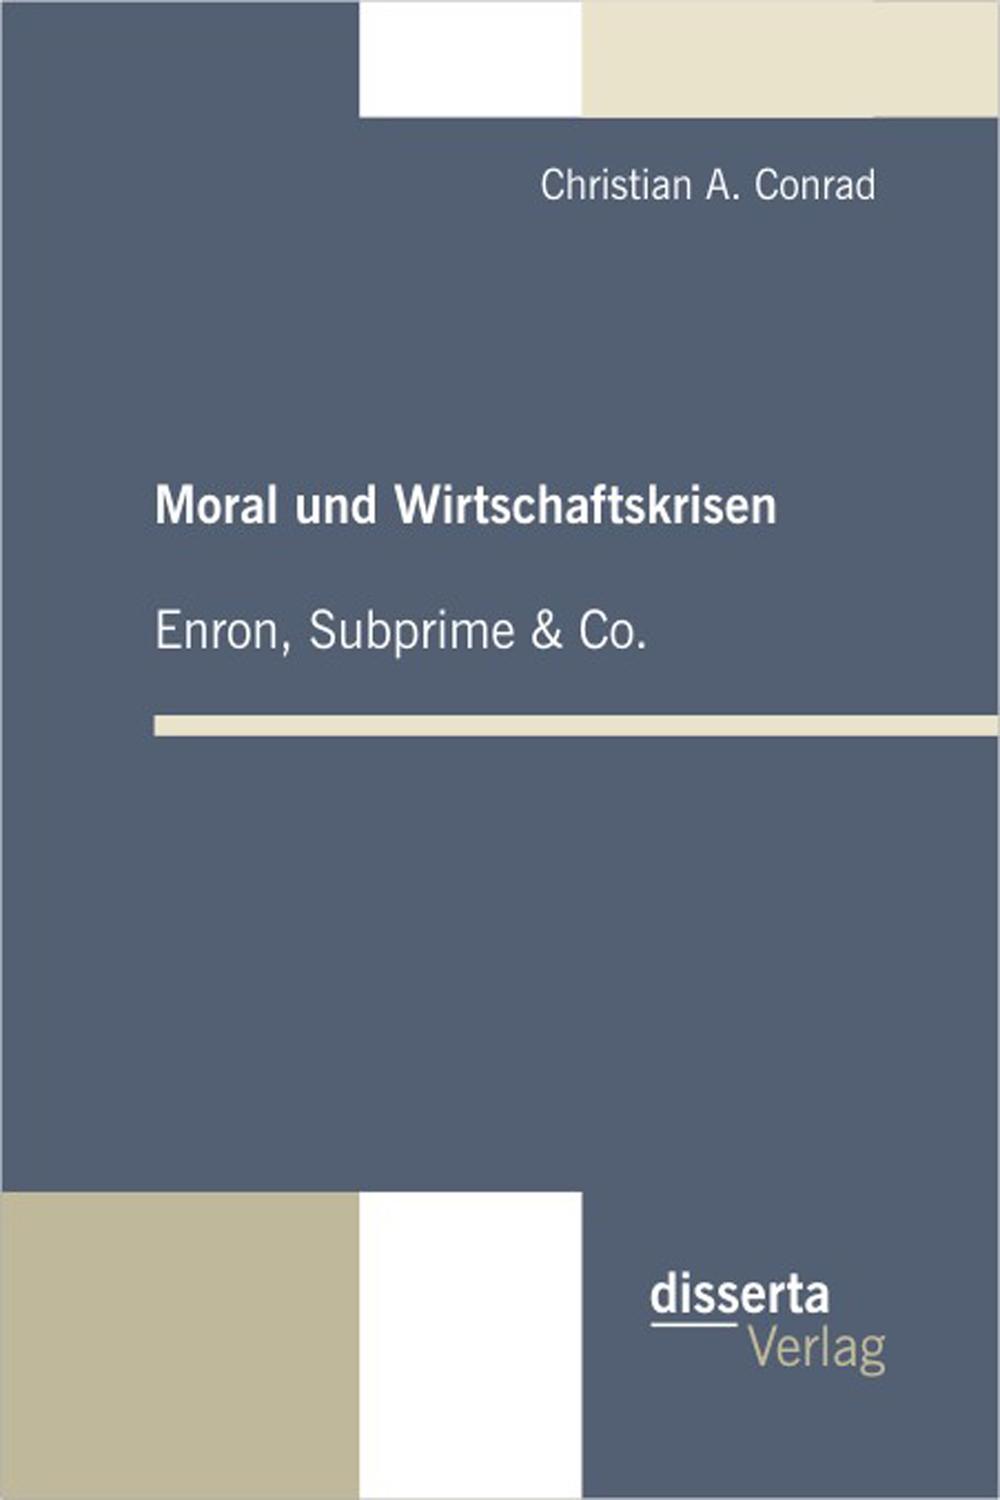 Moral und Wirtschaftskrisen – Enron, Subprime & Co. - Christian A. Conrad